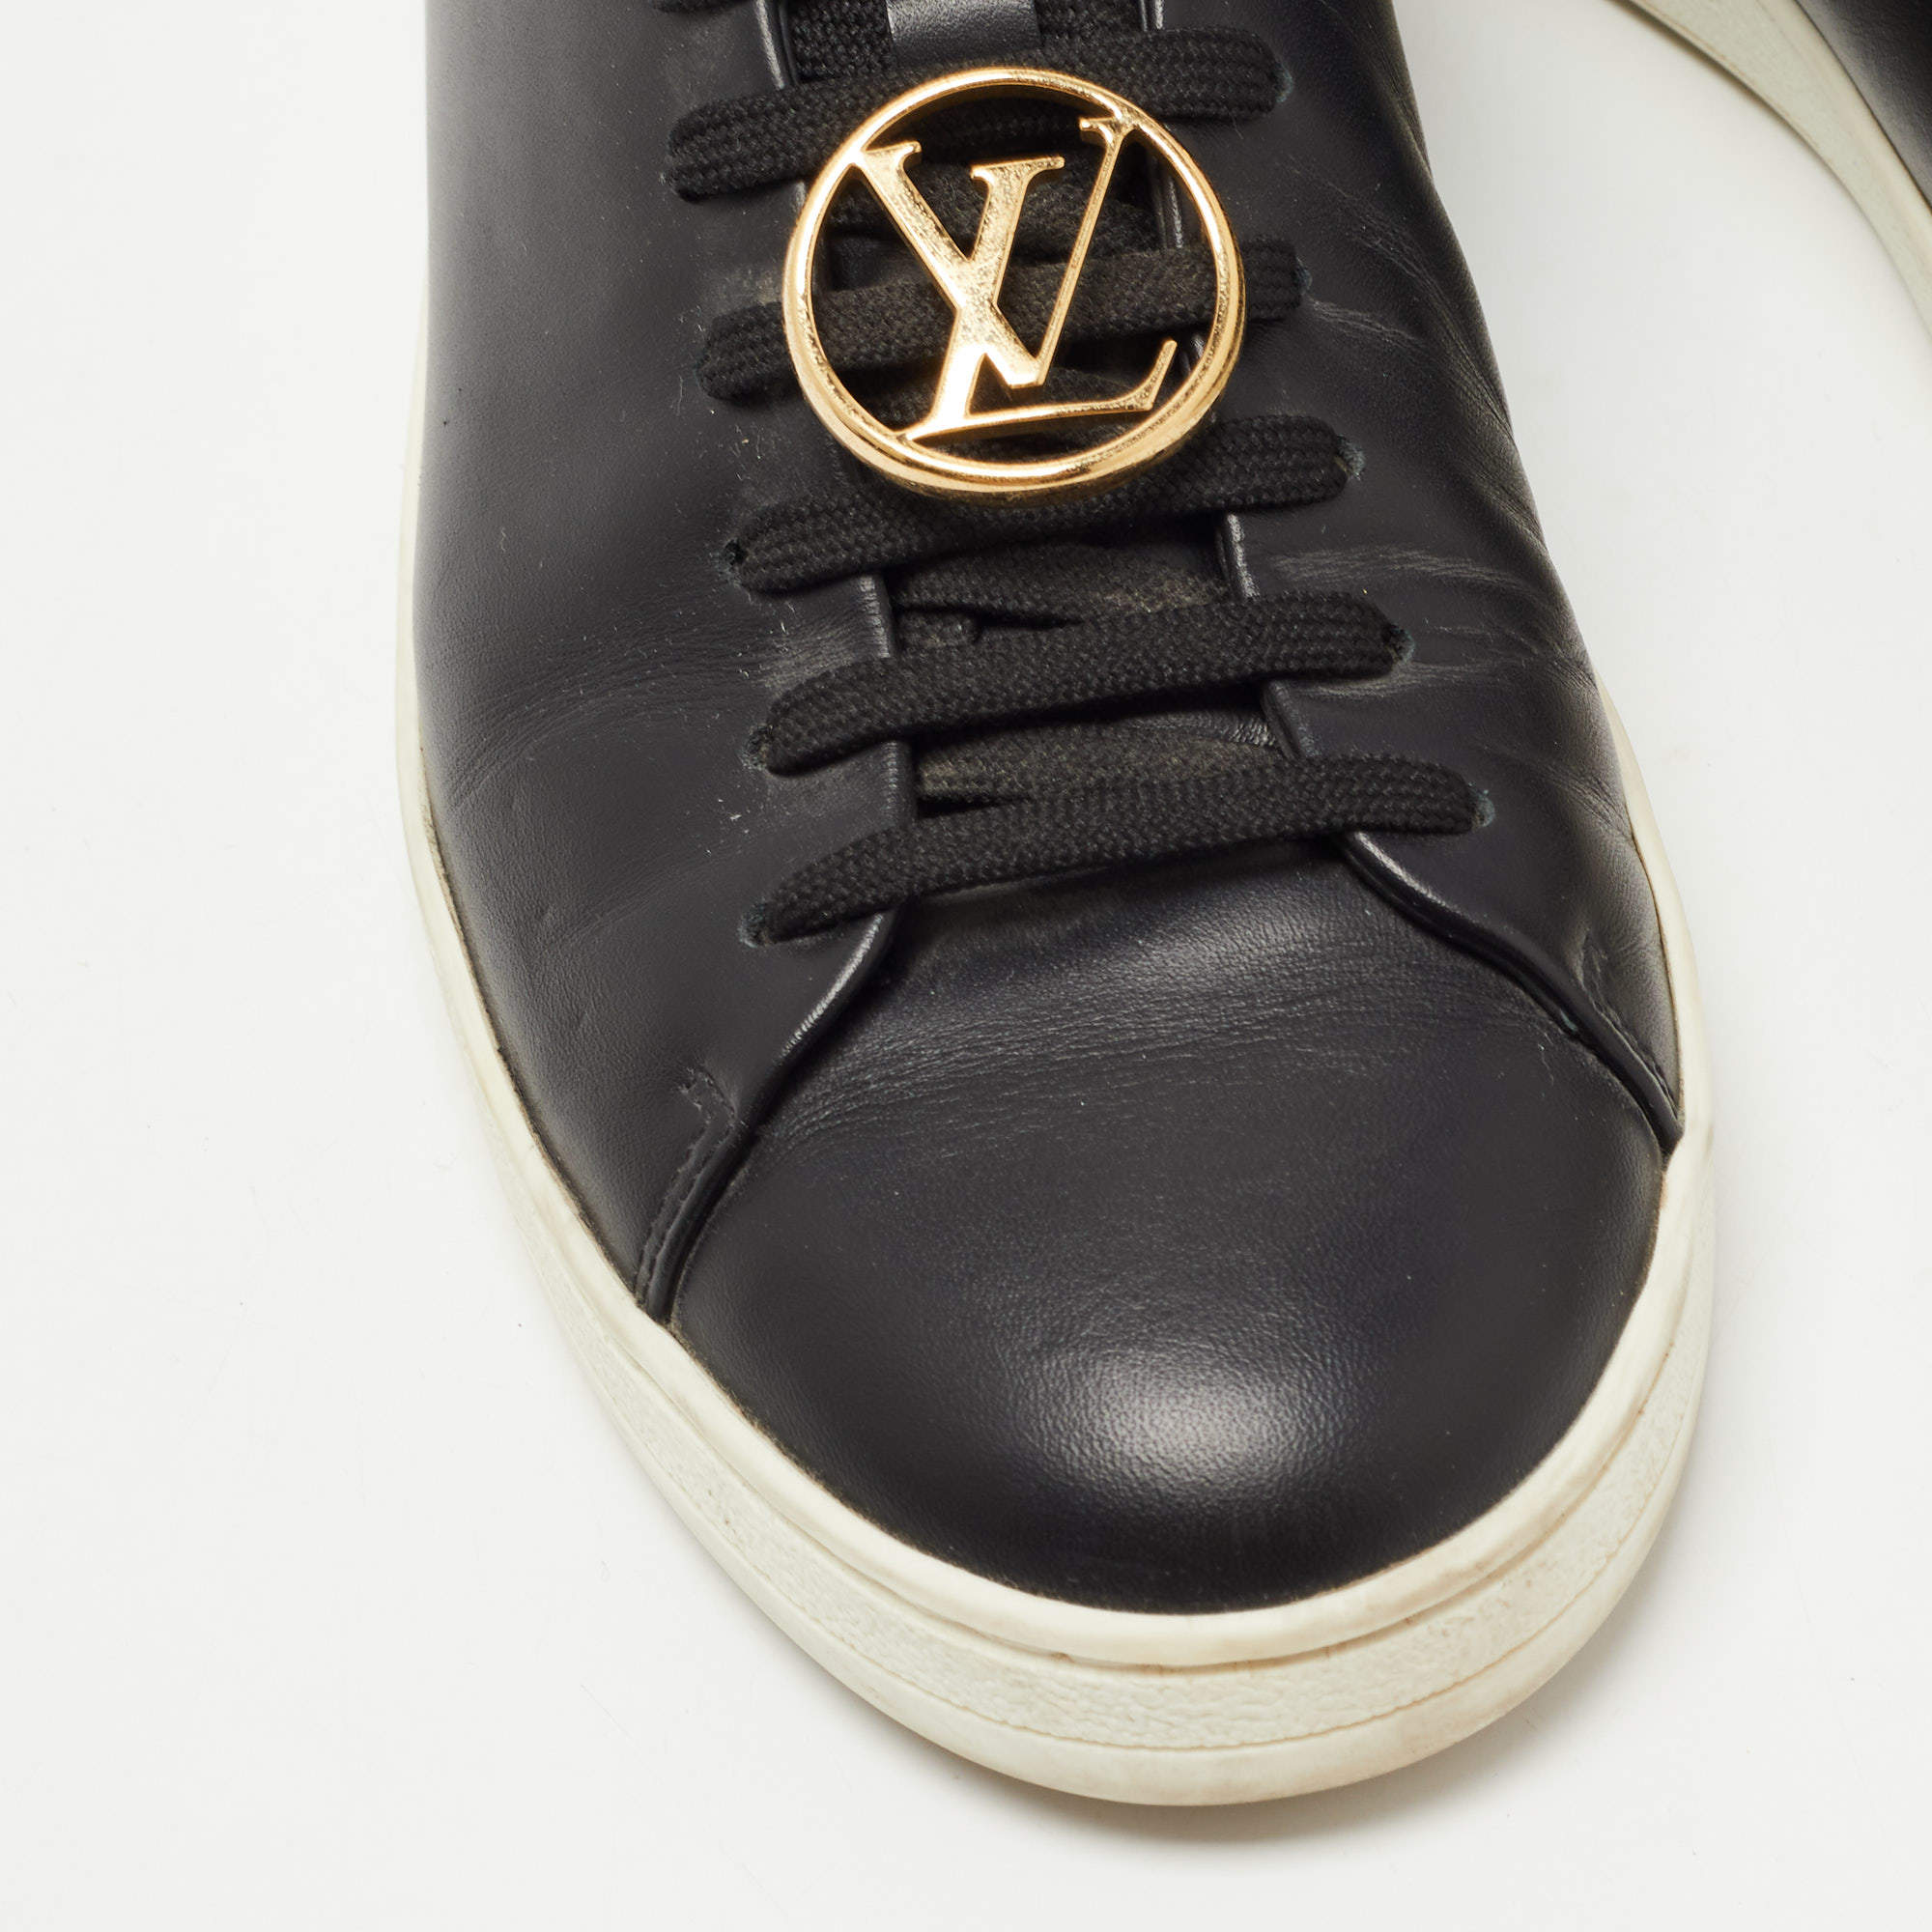 Louis Vuitton FRONTROW Sneaker Cacao. Size 38.5